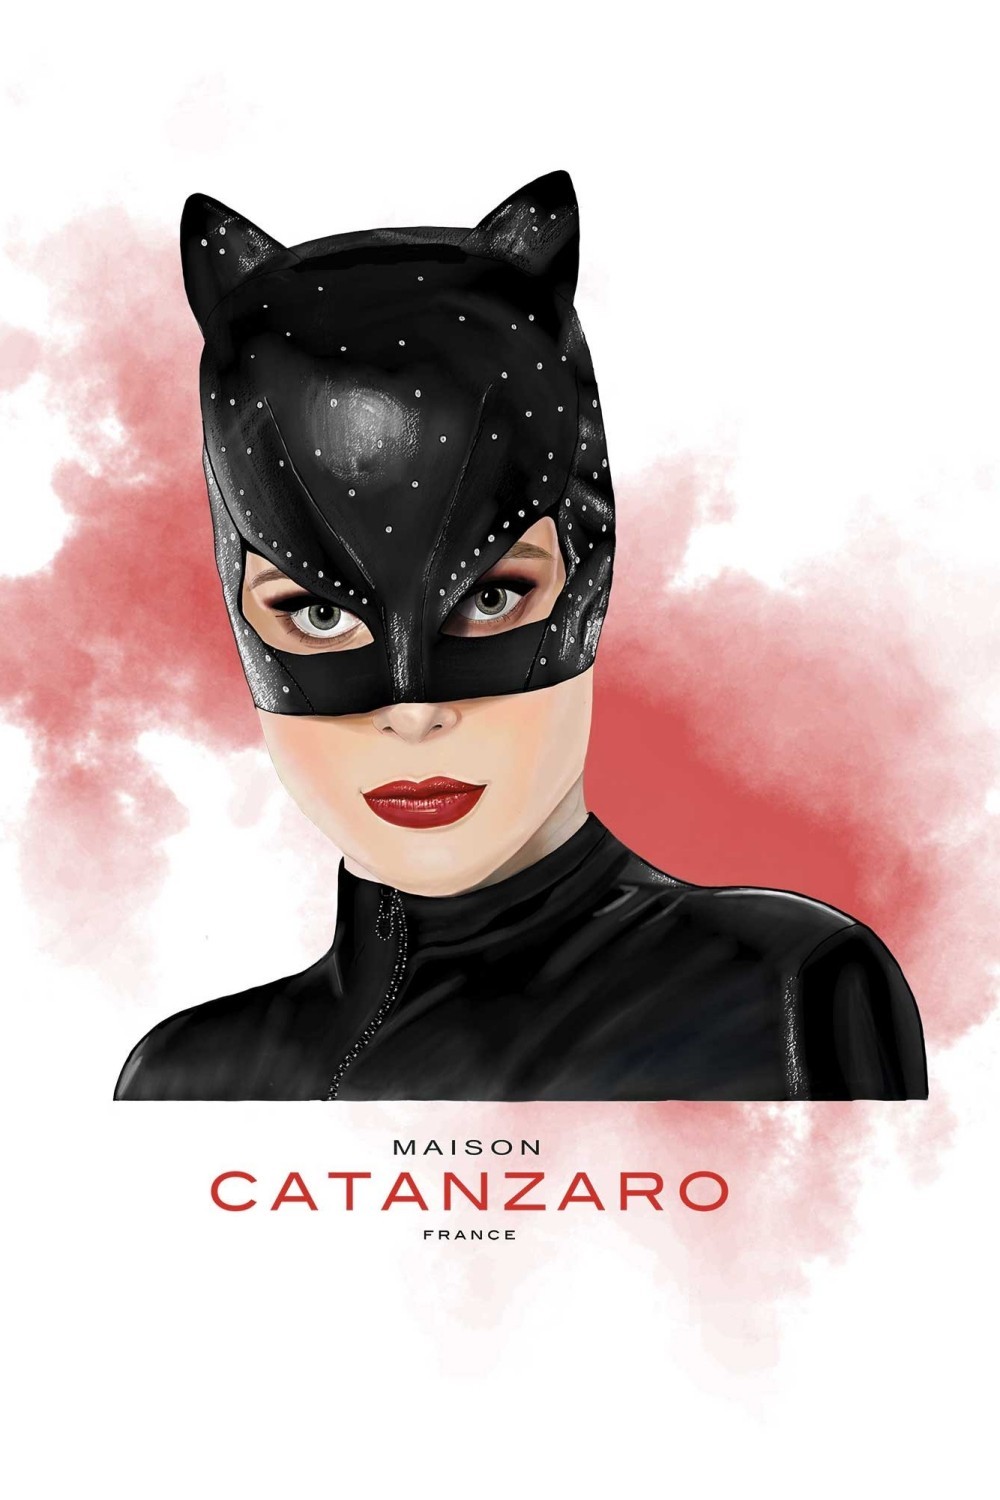 Cat mask tee shirt homme blanc - Patrice Catanzaro Site Officiel